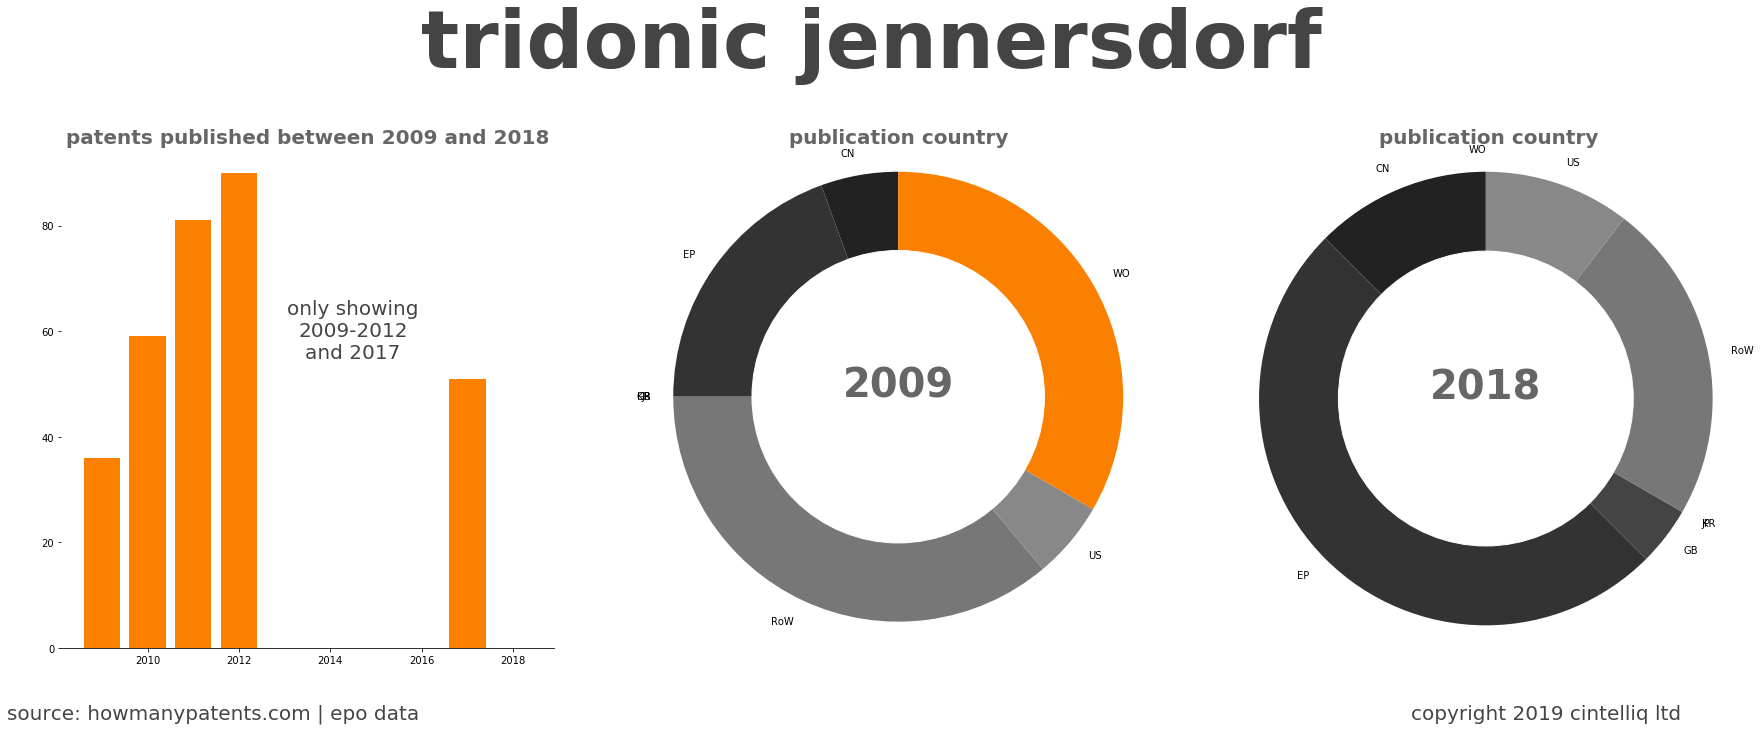 summary of patents for Tridonic Jennersdorf